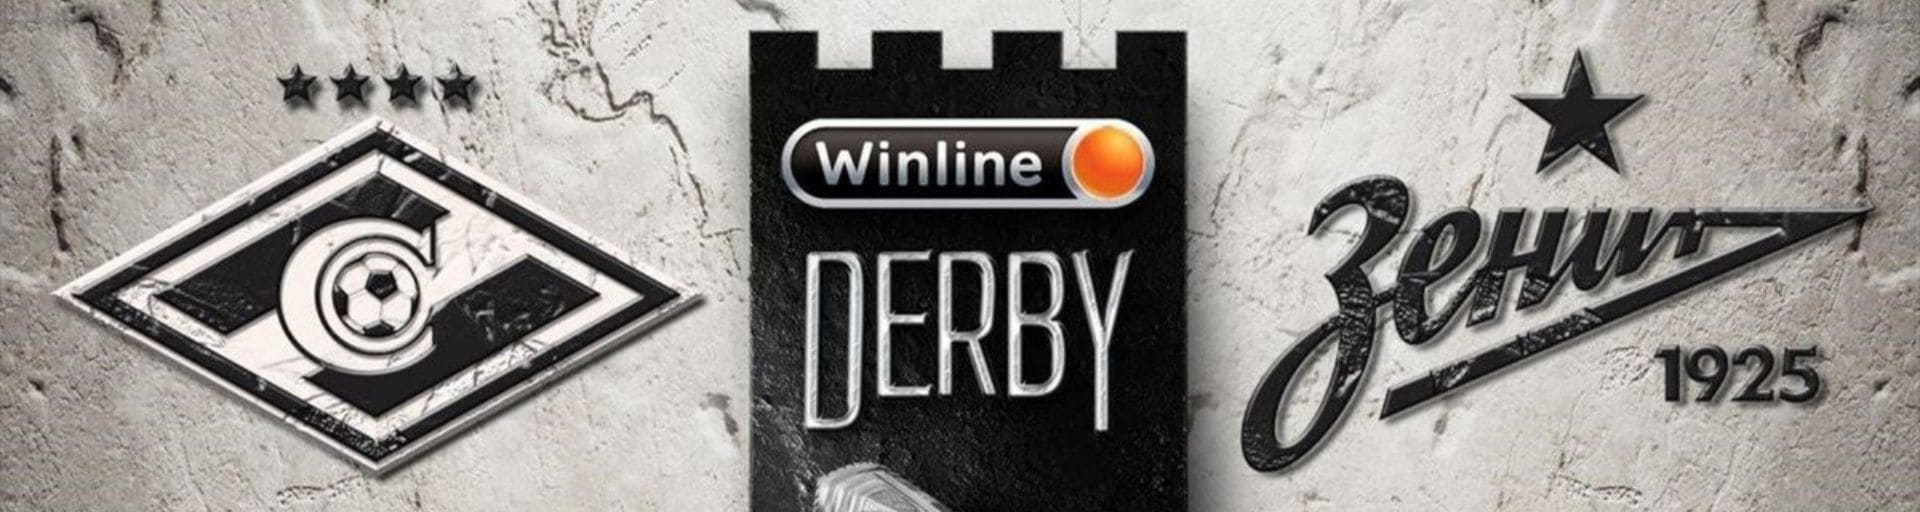 Winline Derby